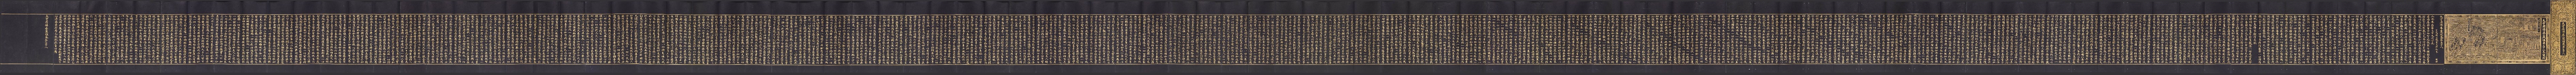 Avatamsaka Sutra No. 78, 1200s-1300s. Creator: Unknown.